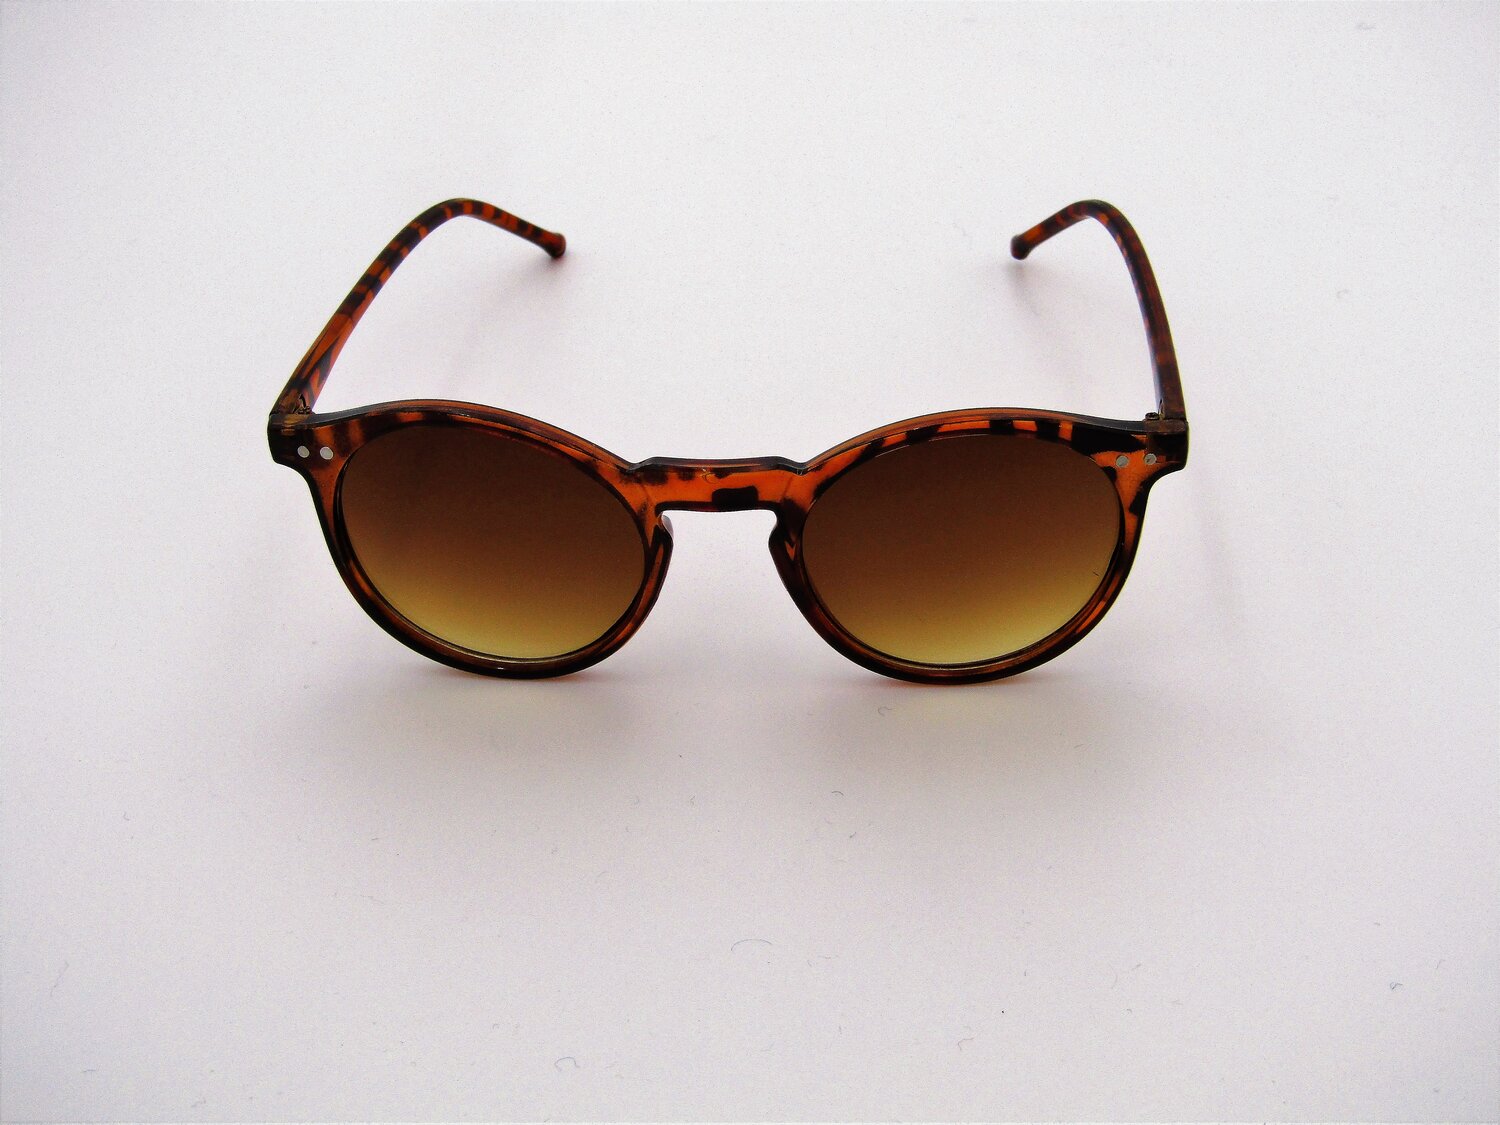 AN Dapper Sunglasses - Tortoise Shell Style (Round)